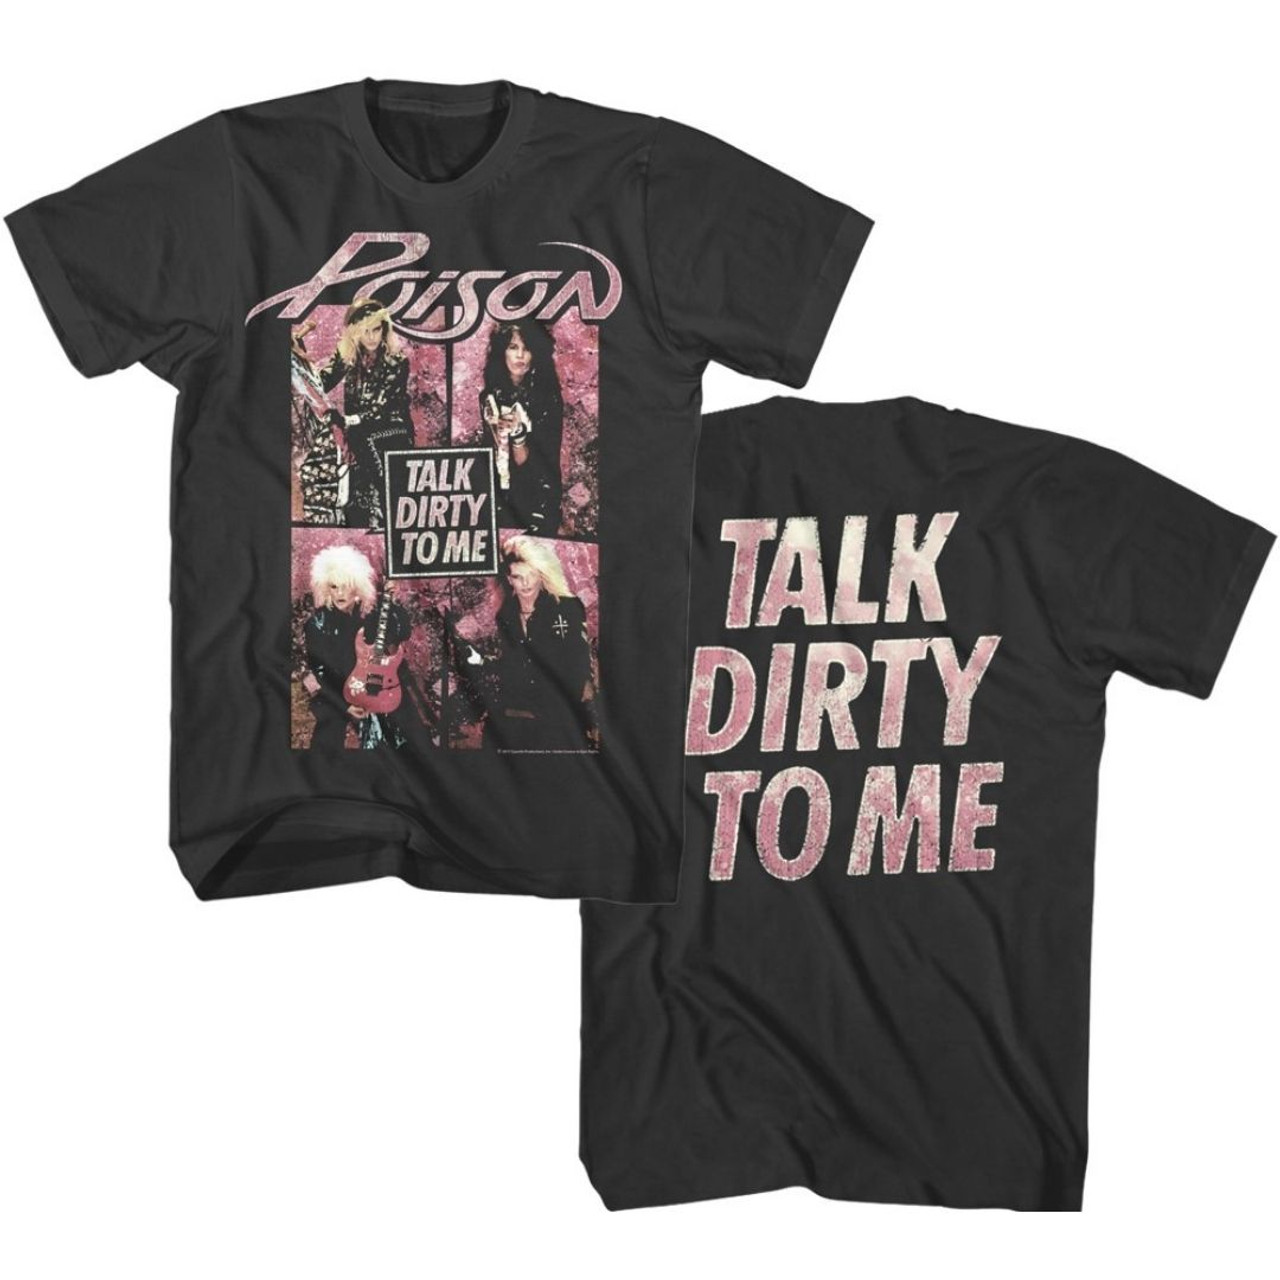 Poison T-Shirt Talk Dirty Me